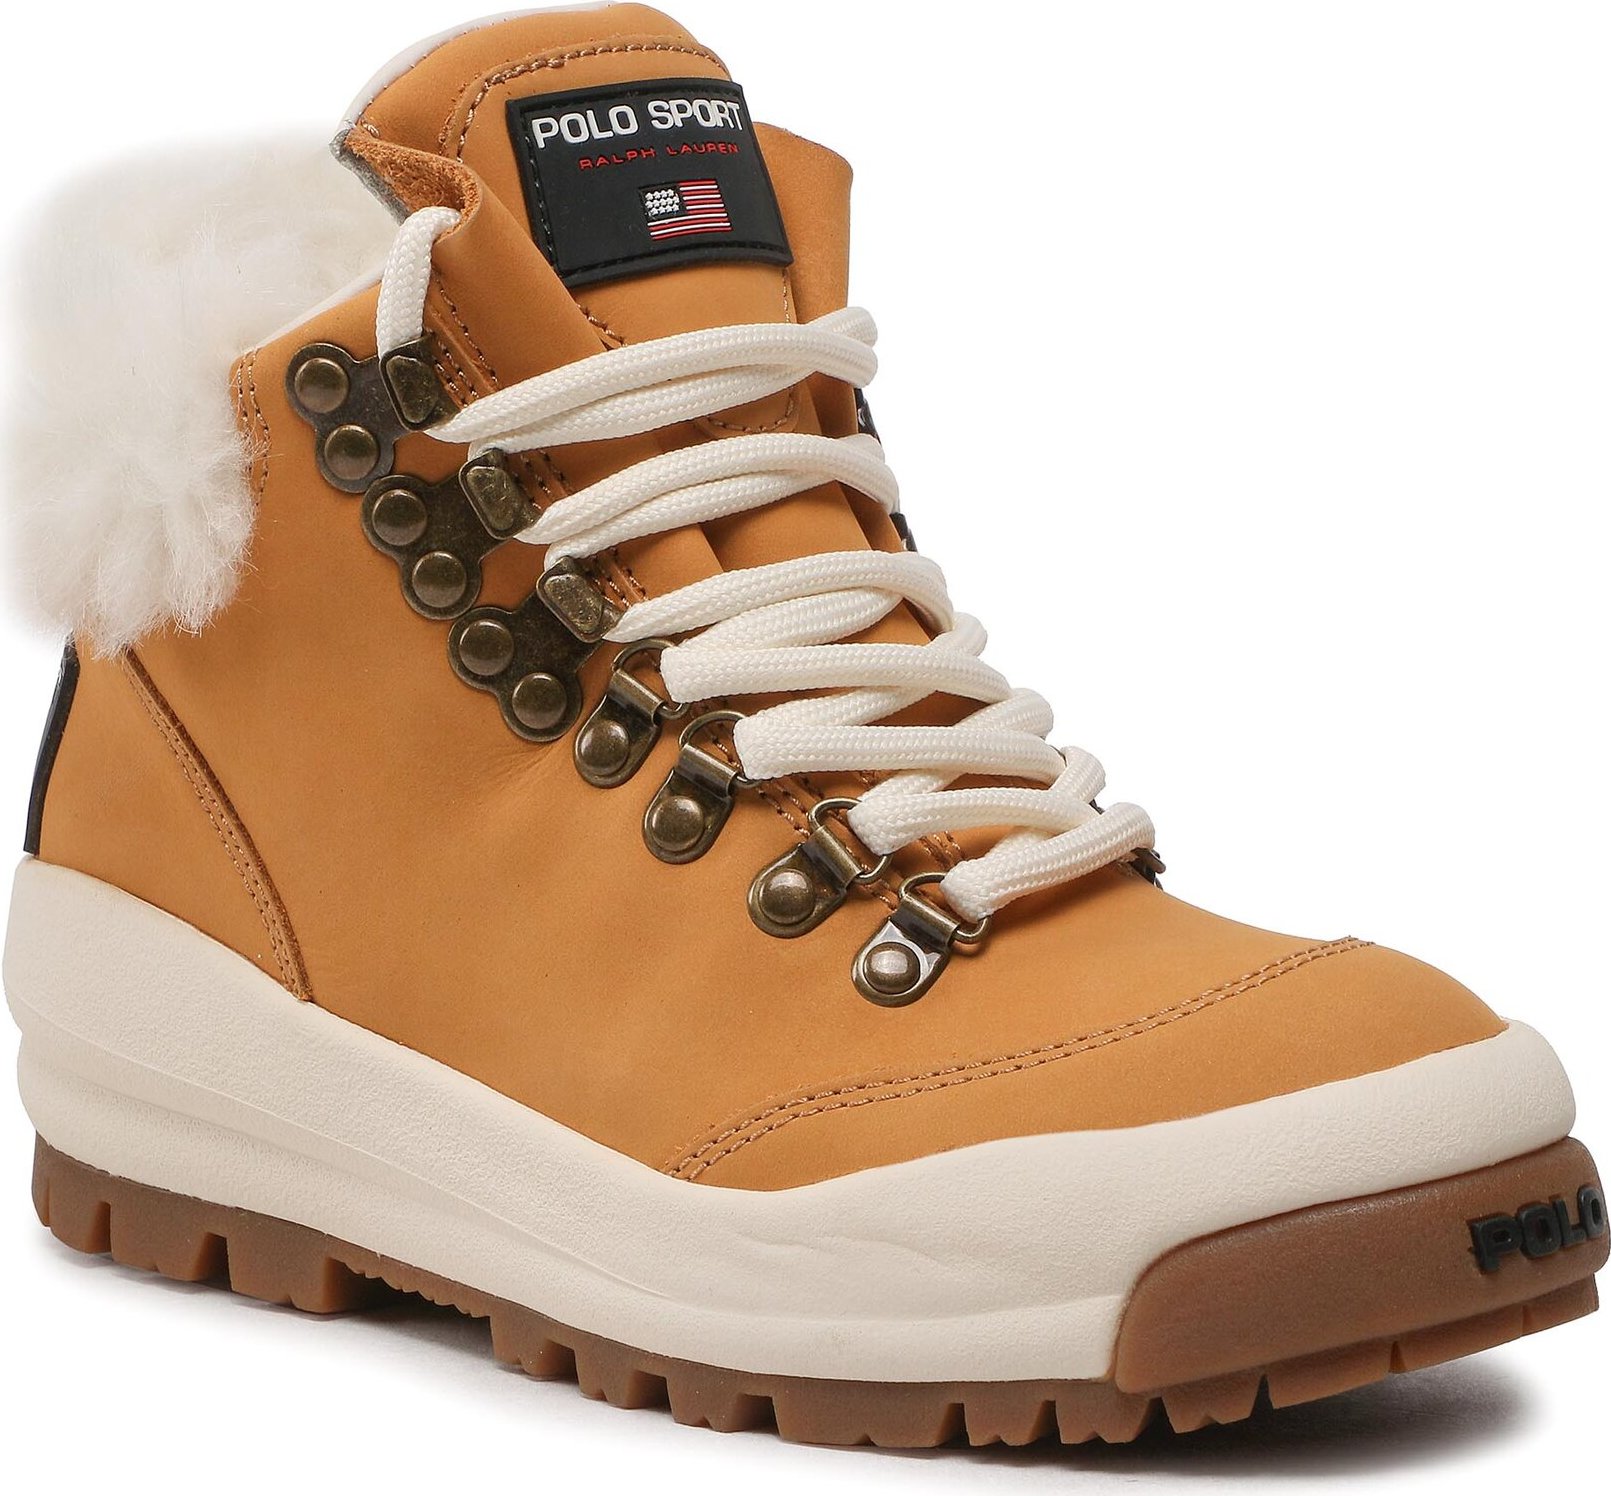 Outdoorová obuv Polo Ralph Lauren Plo Spt Hker-Sk-Htl 804888512001 Wheat